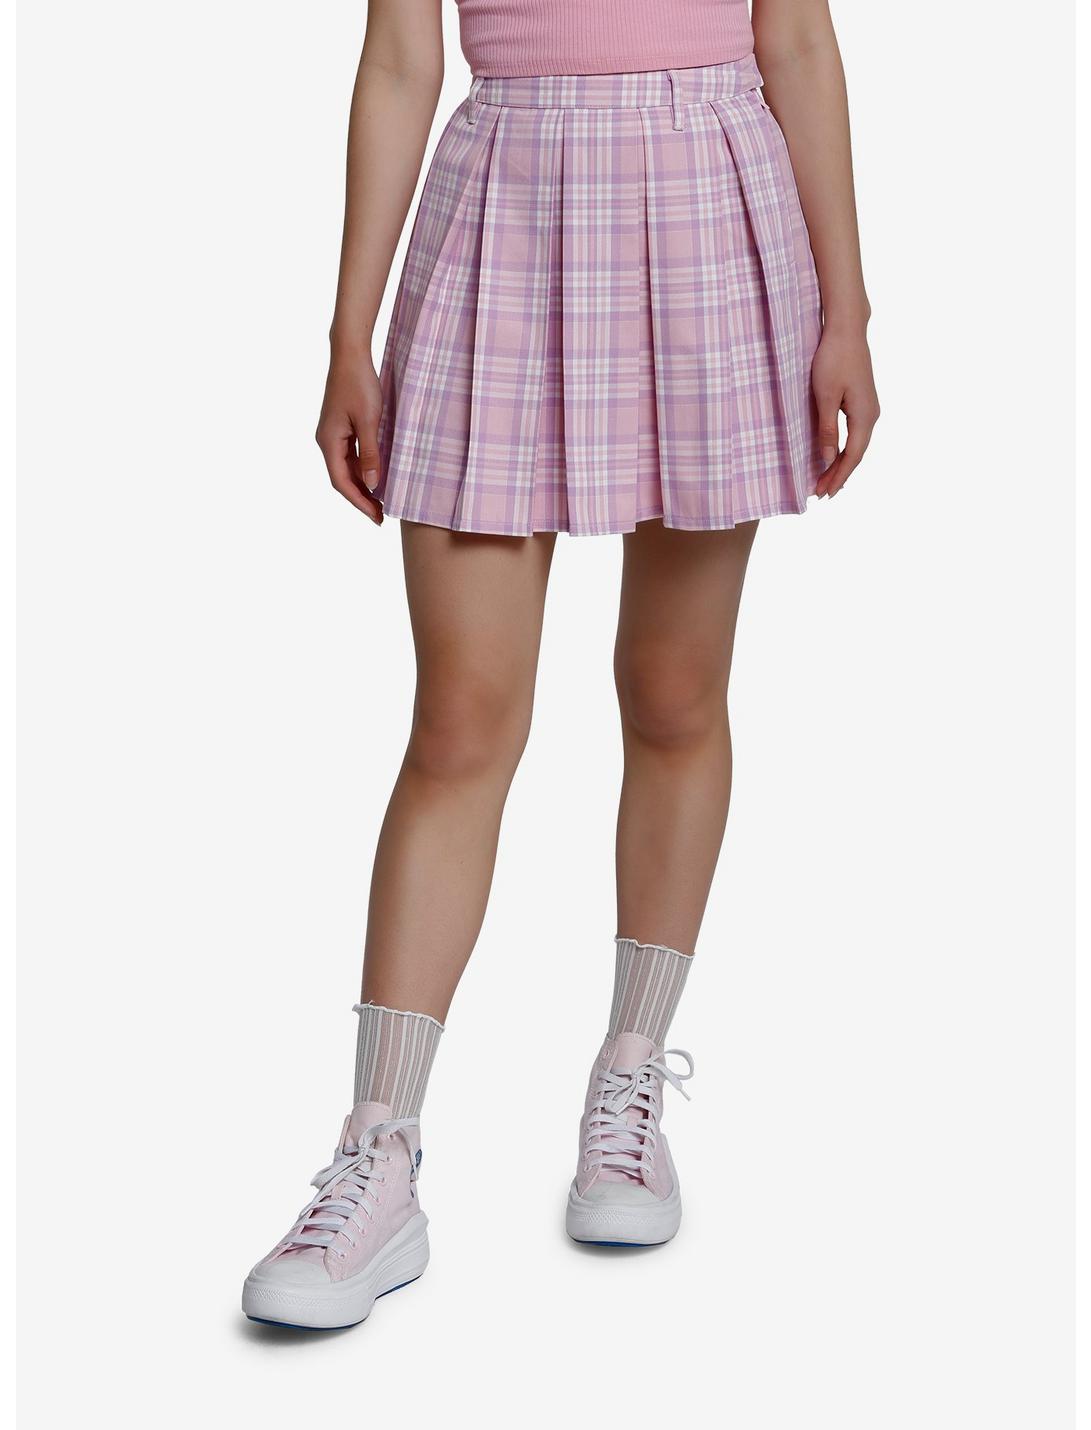 Sweet Society Pink & Lavender Plaid Pleated Skirt, PLAID - PINK, hi-res